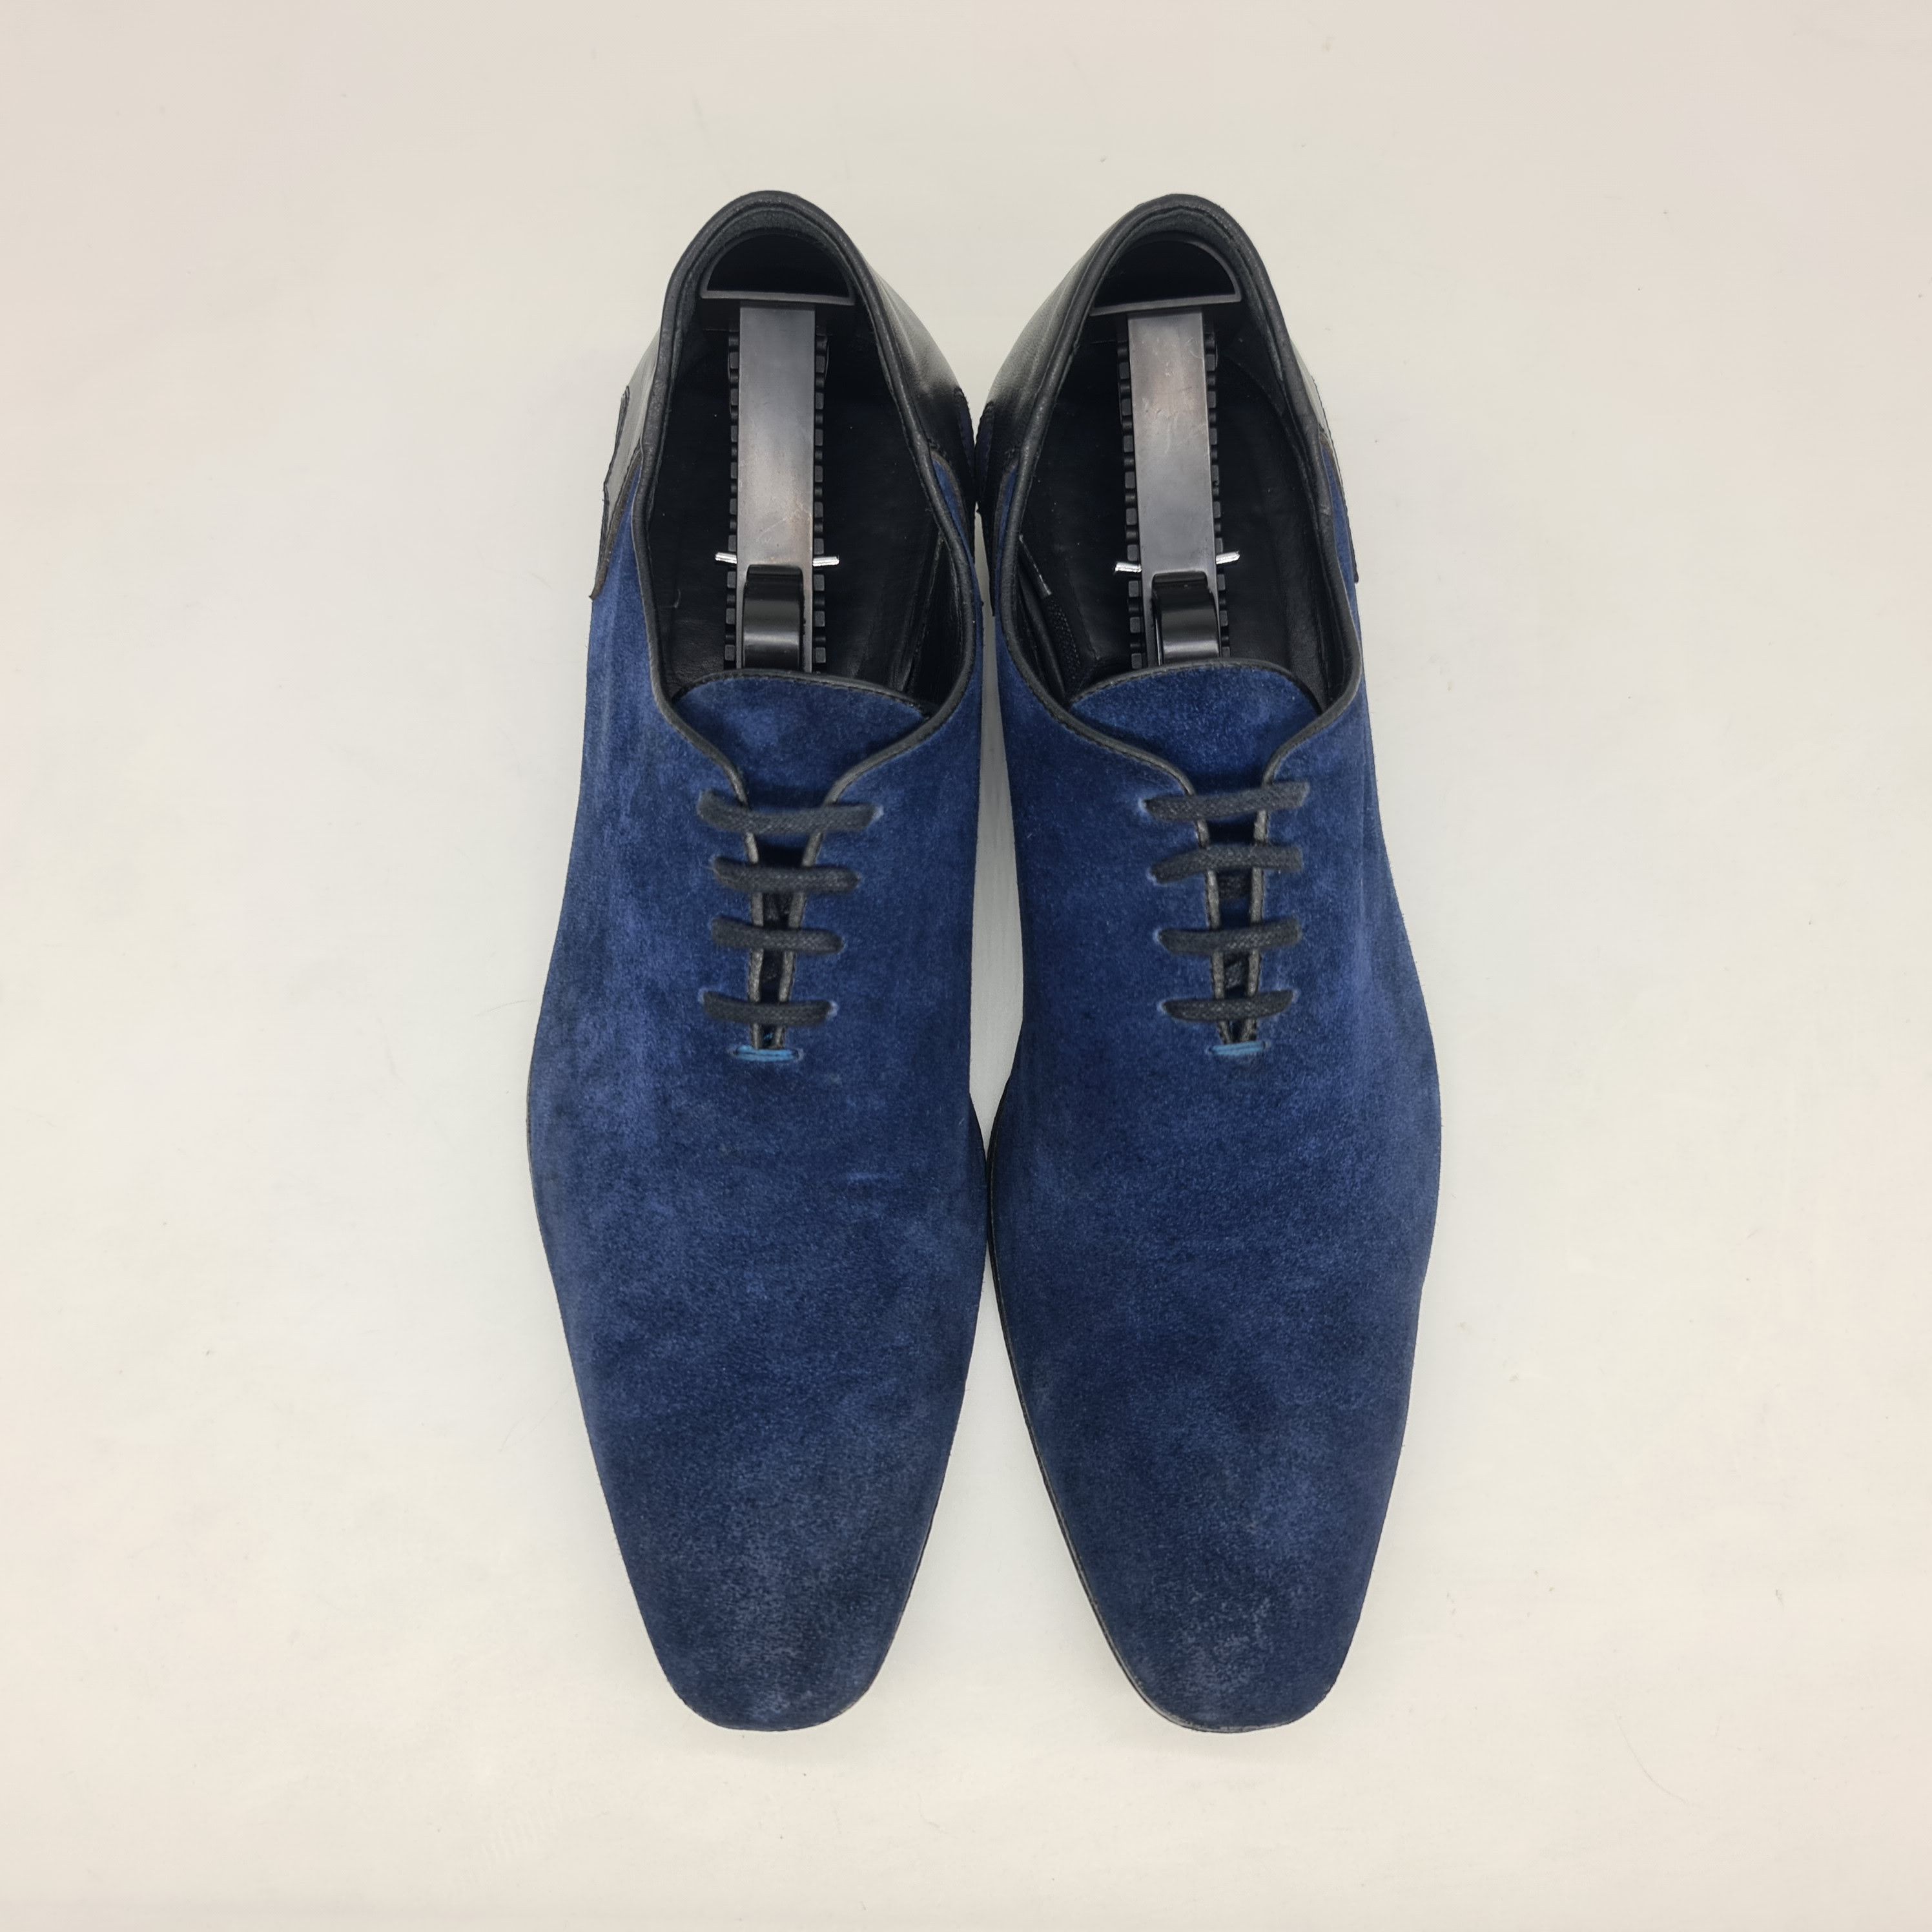 Haider Ackermann - SS16 Runway Blue Suede Oxford Shoes - 3